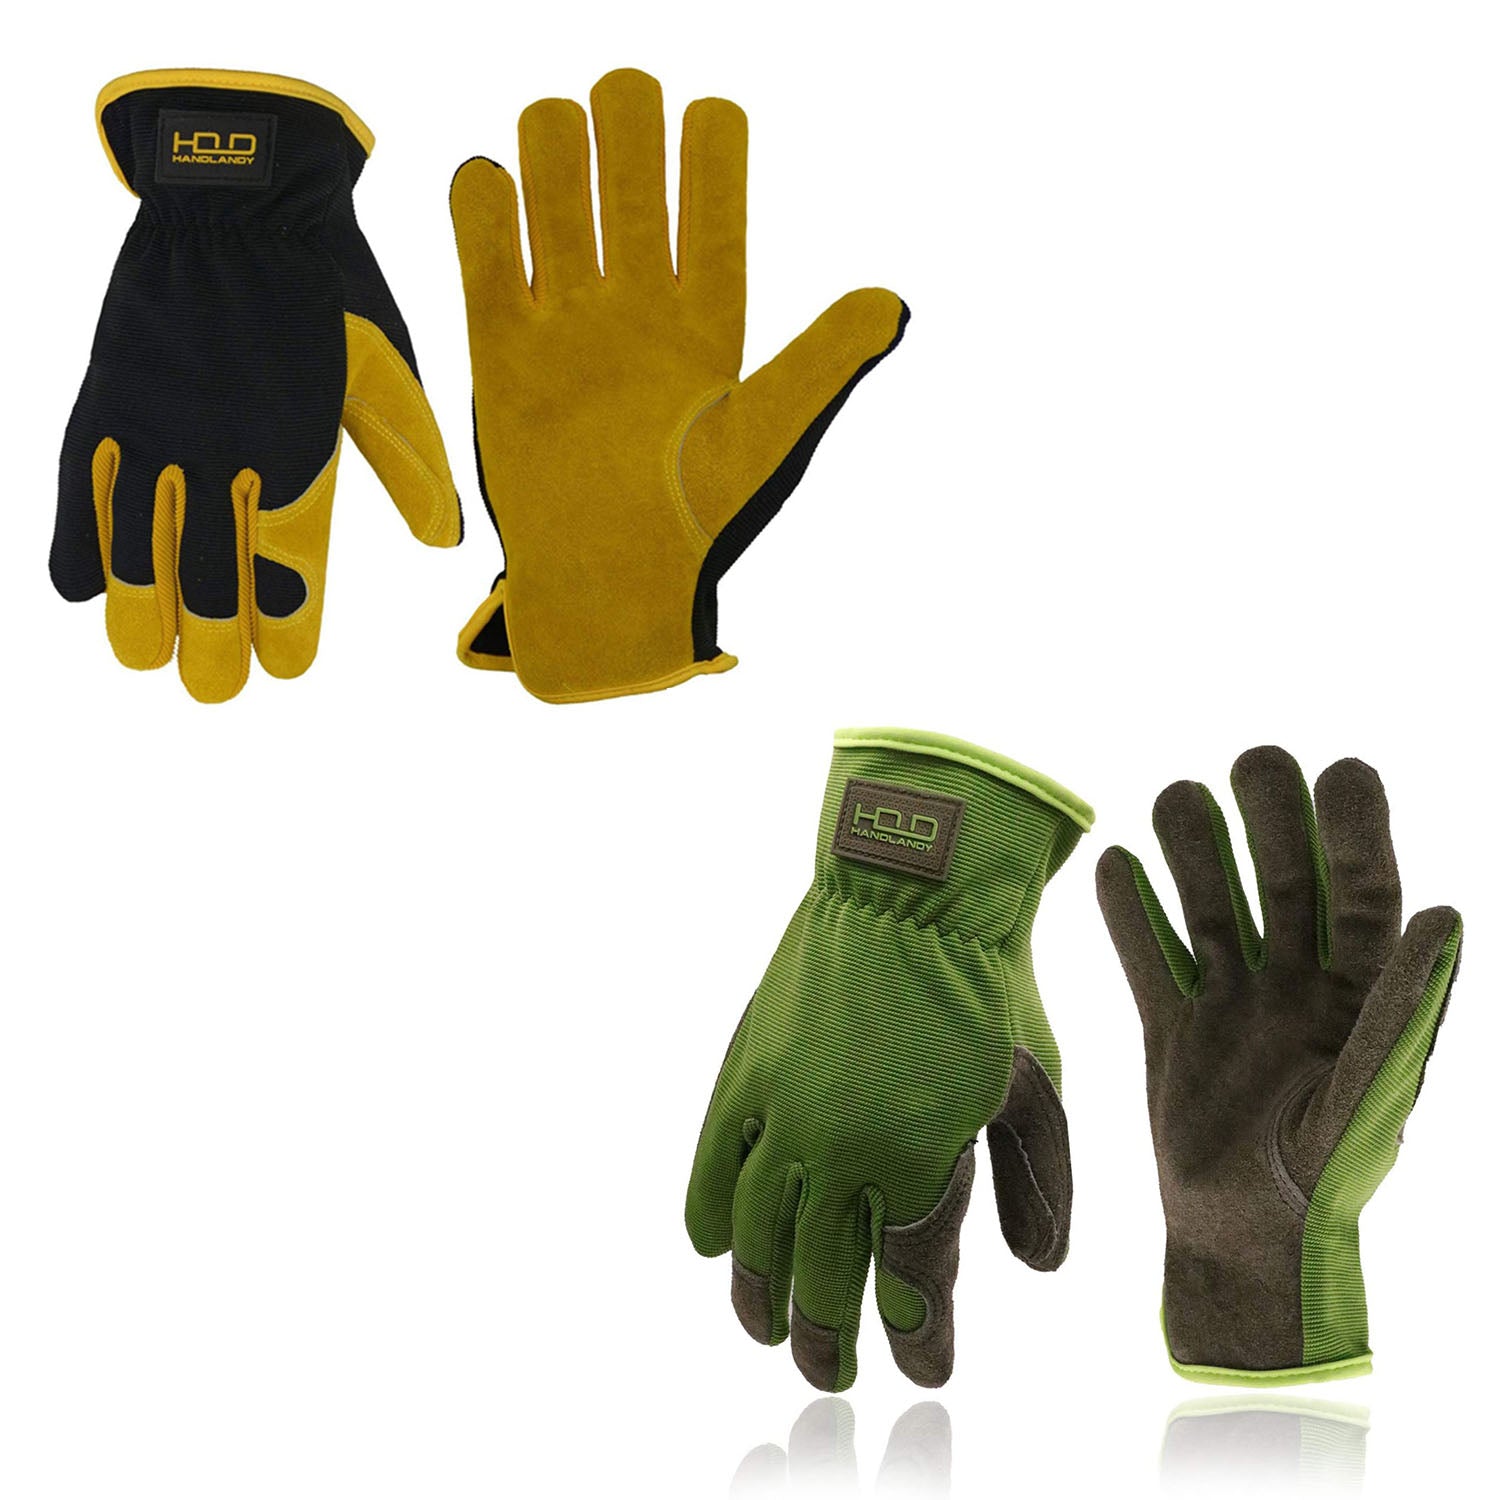 KLDOLLAR Men Leather Work Gloves Gardening Gloves, Working Gloves for Home  Improvement, Yard Work & Warehouse, Flexible Breathable Work Gloves